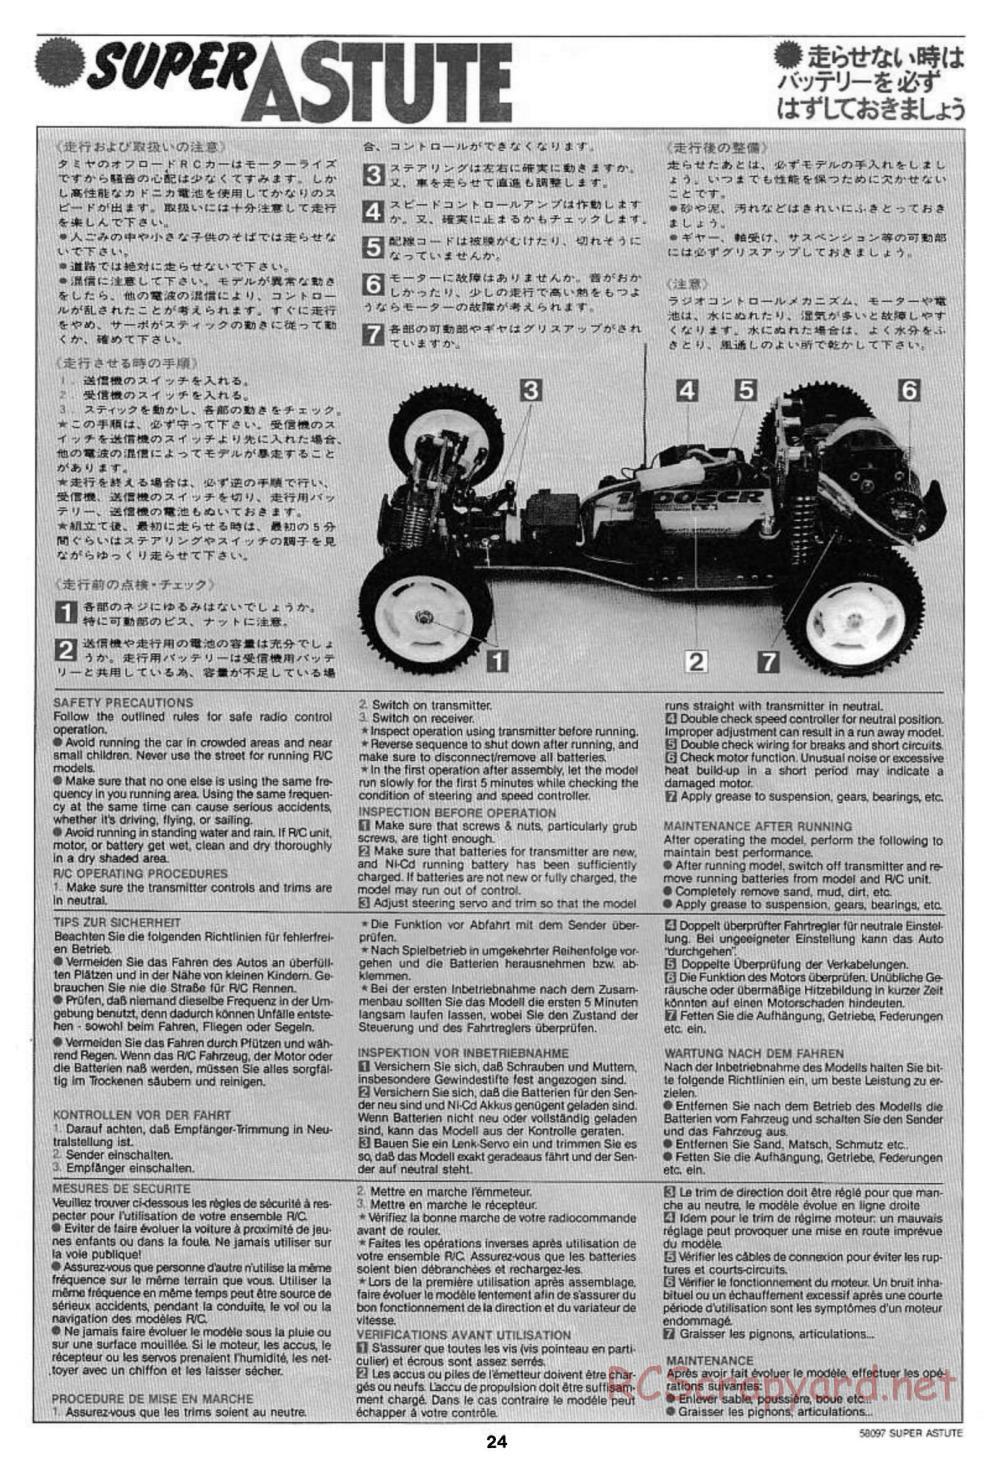 Tamiya - Super Astute - 58097 - Manual - Page 24